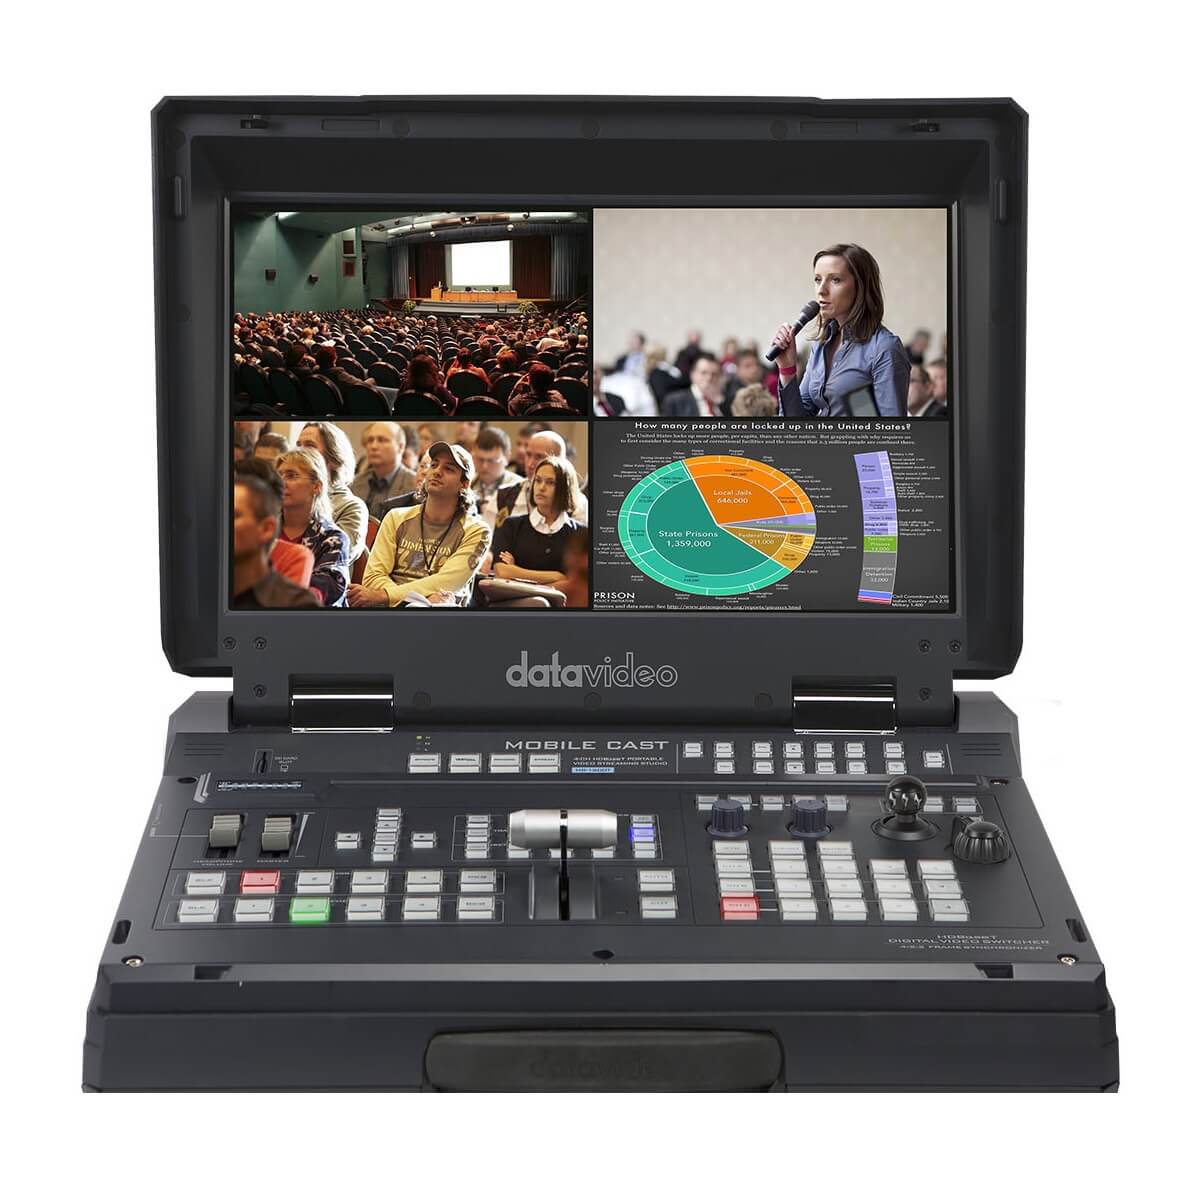 DataVideo HS-1600T MARK II - 4-ch HD HDBaseT Portable Video Streaming Studio, front